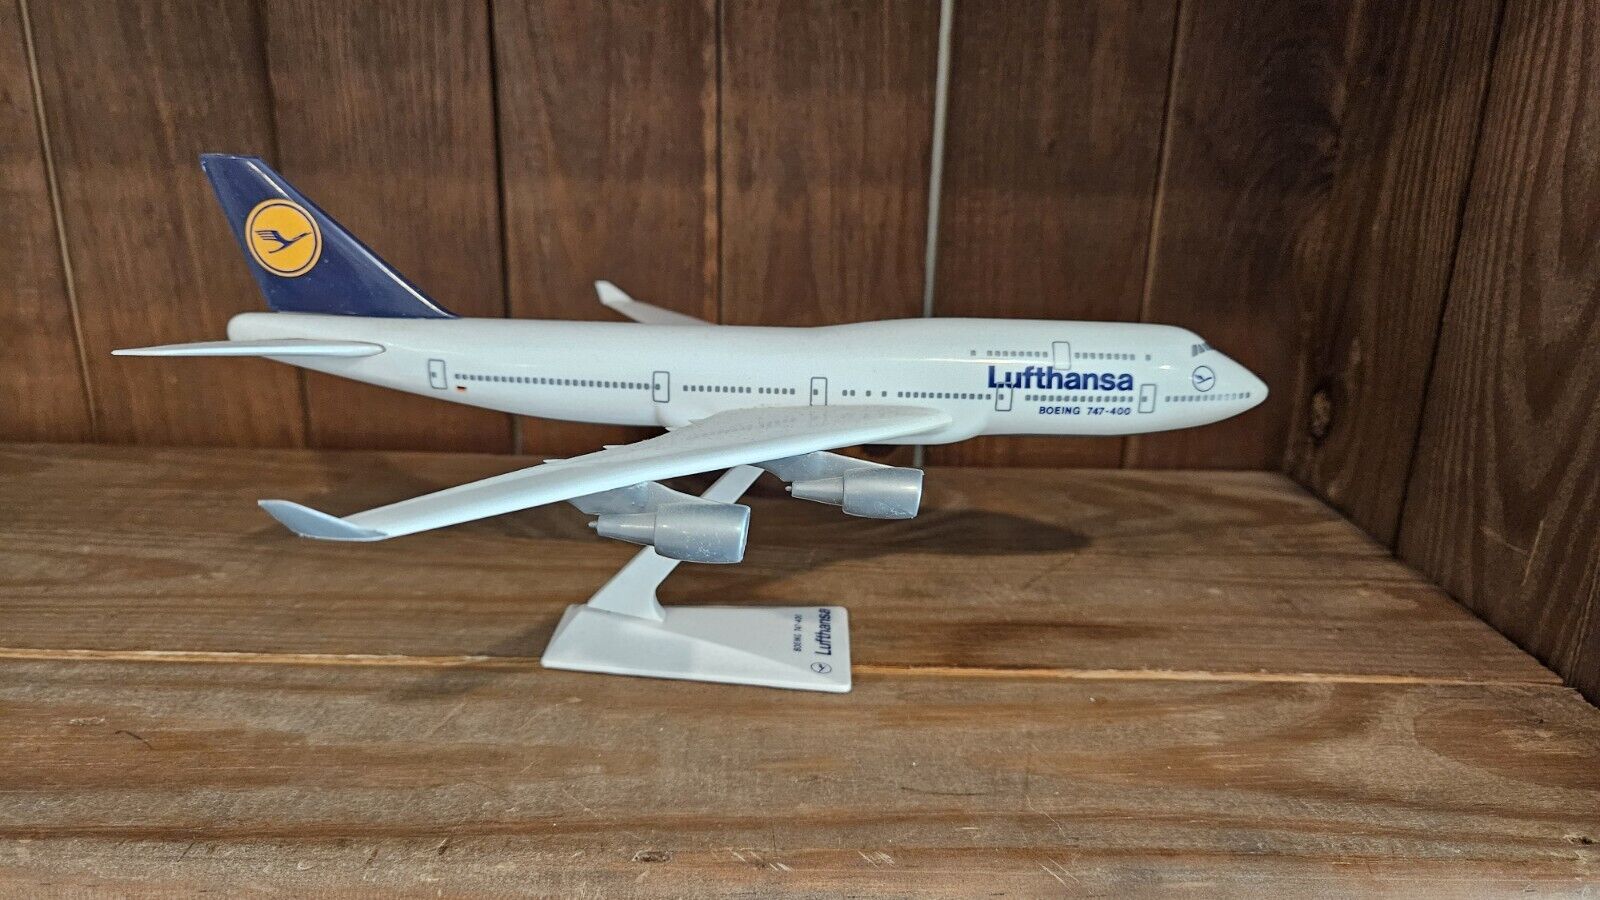 Lufthansa Boeing 747-400 Plastic Snap Fit Model